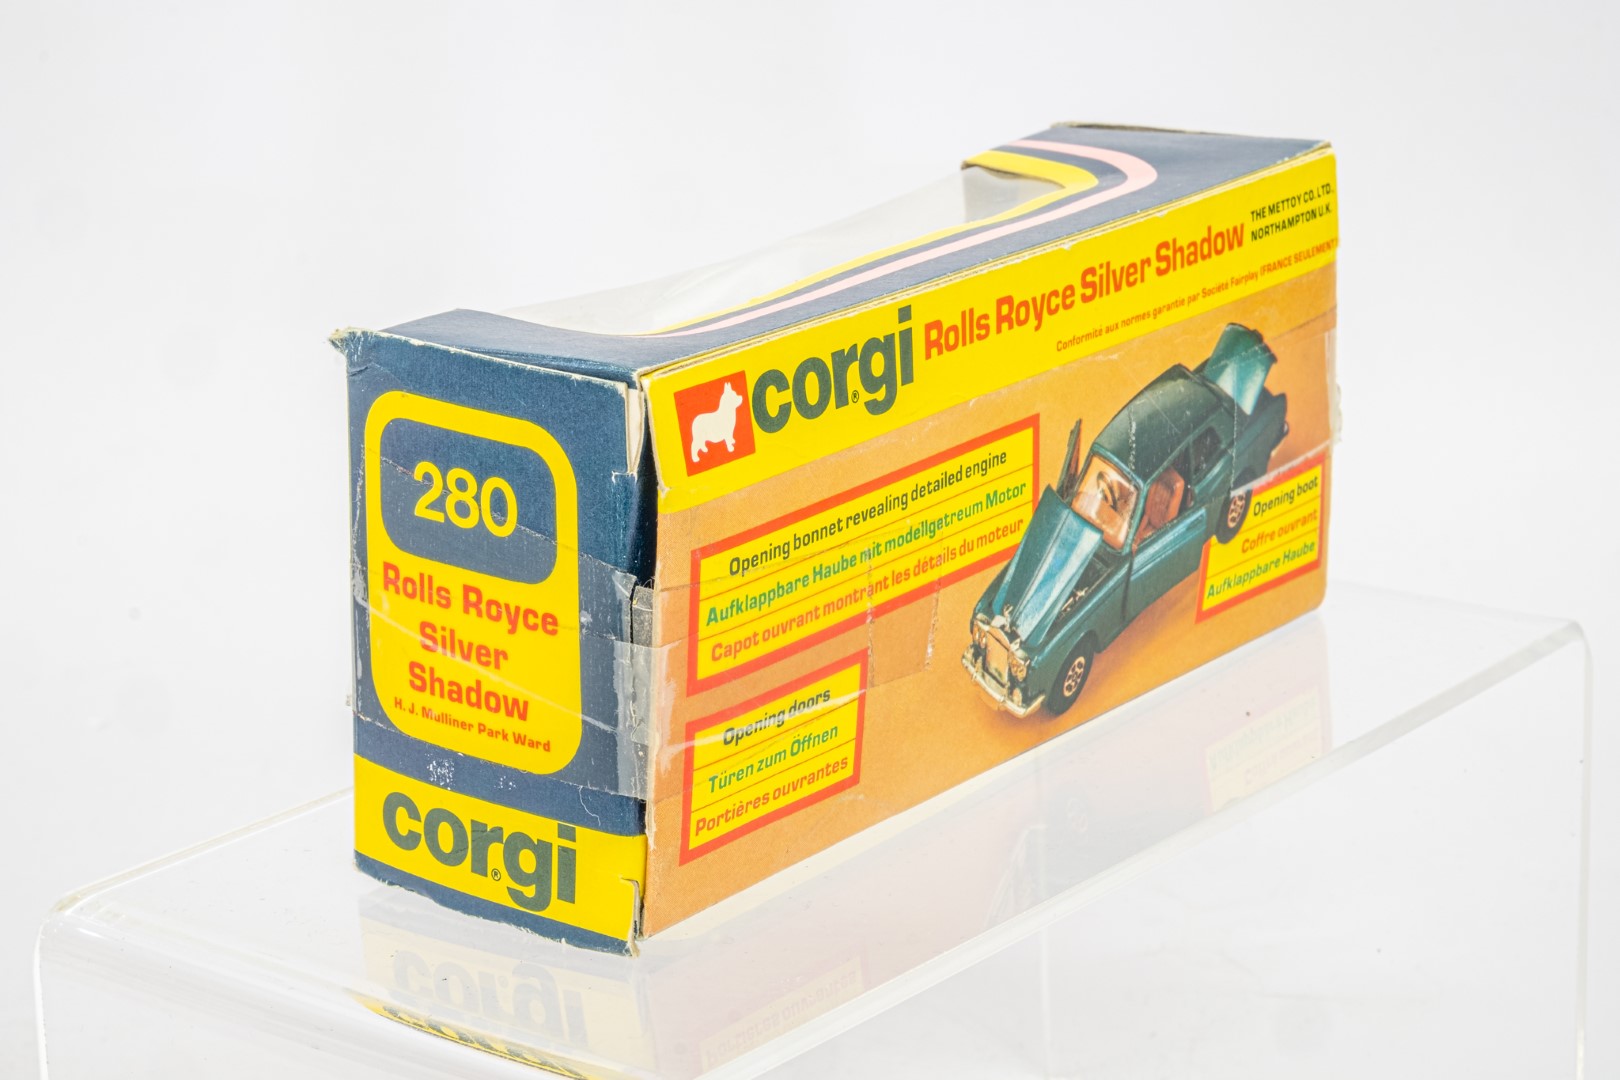 Corgi Rolls-Royce Silver Shadow - Original Box - Image 3 of 7